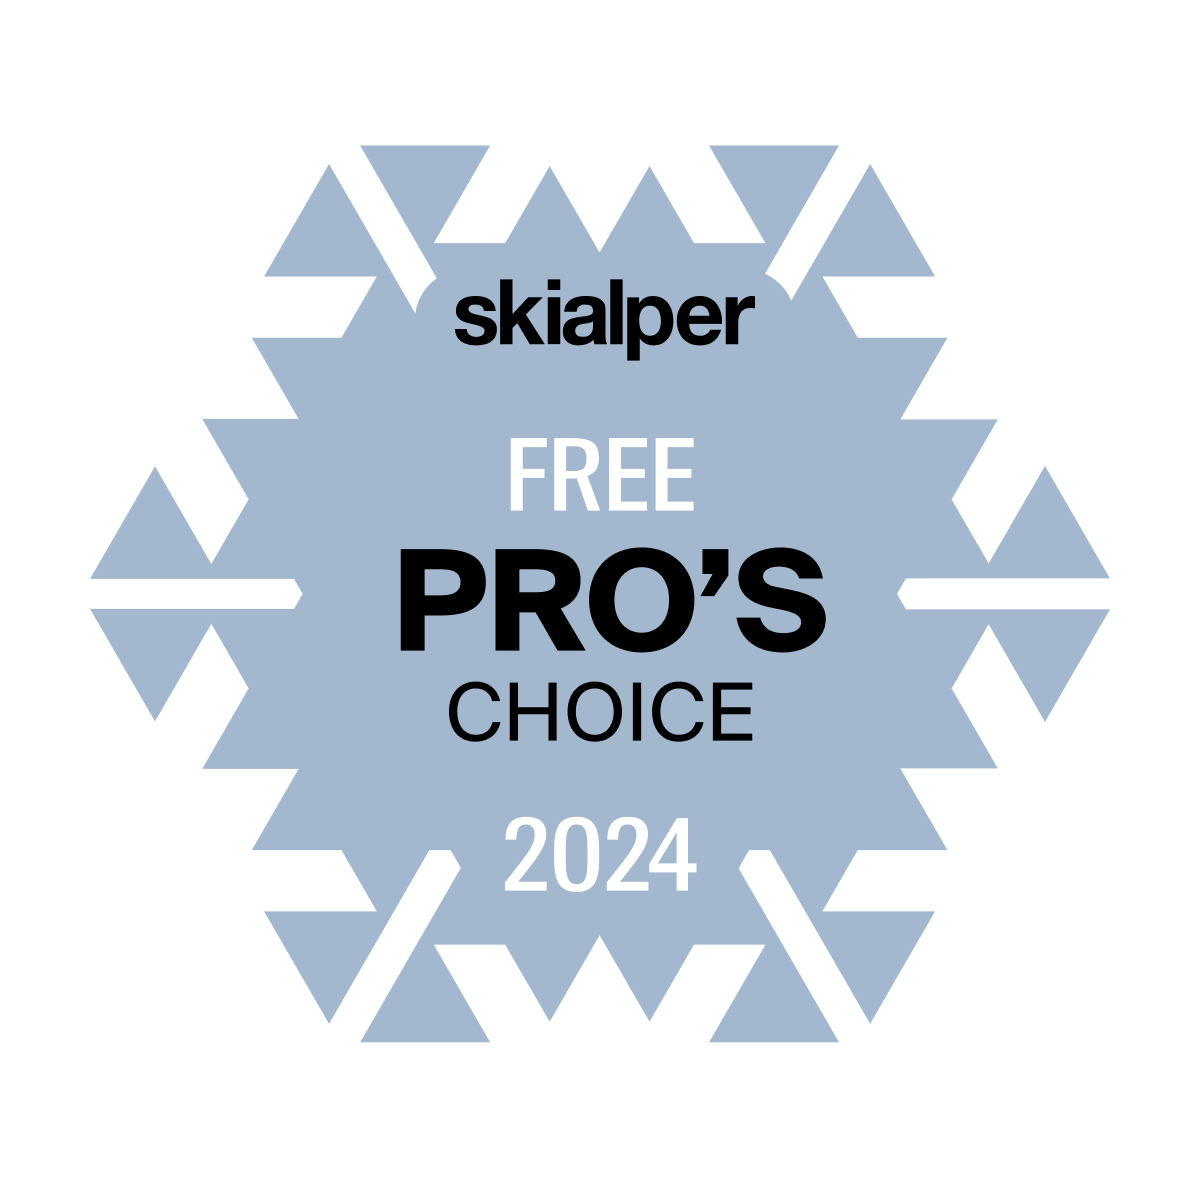 Pro's choice Free